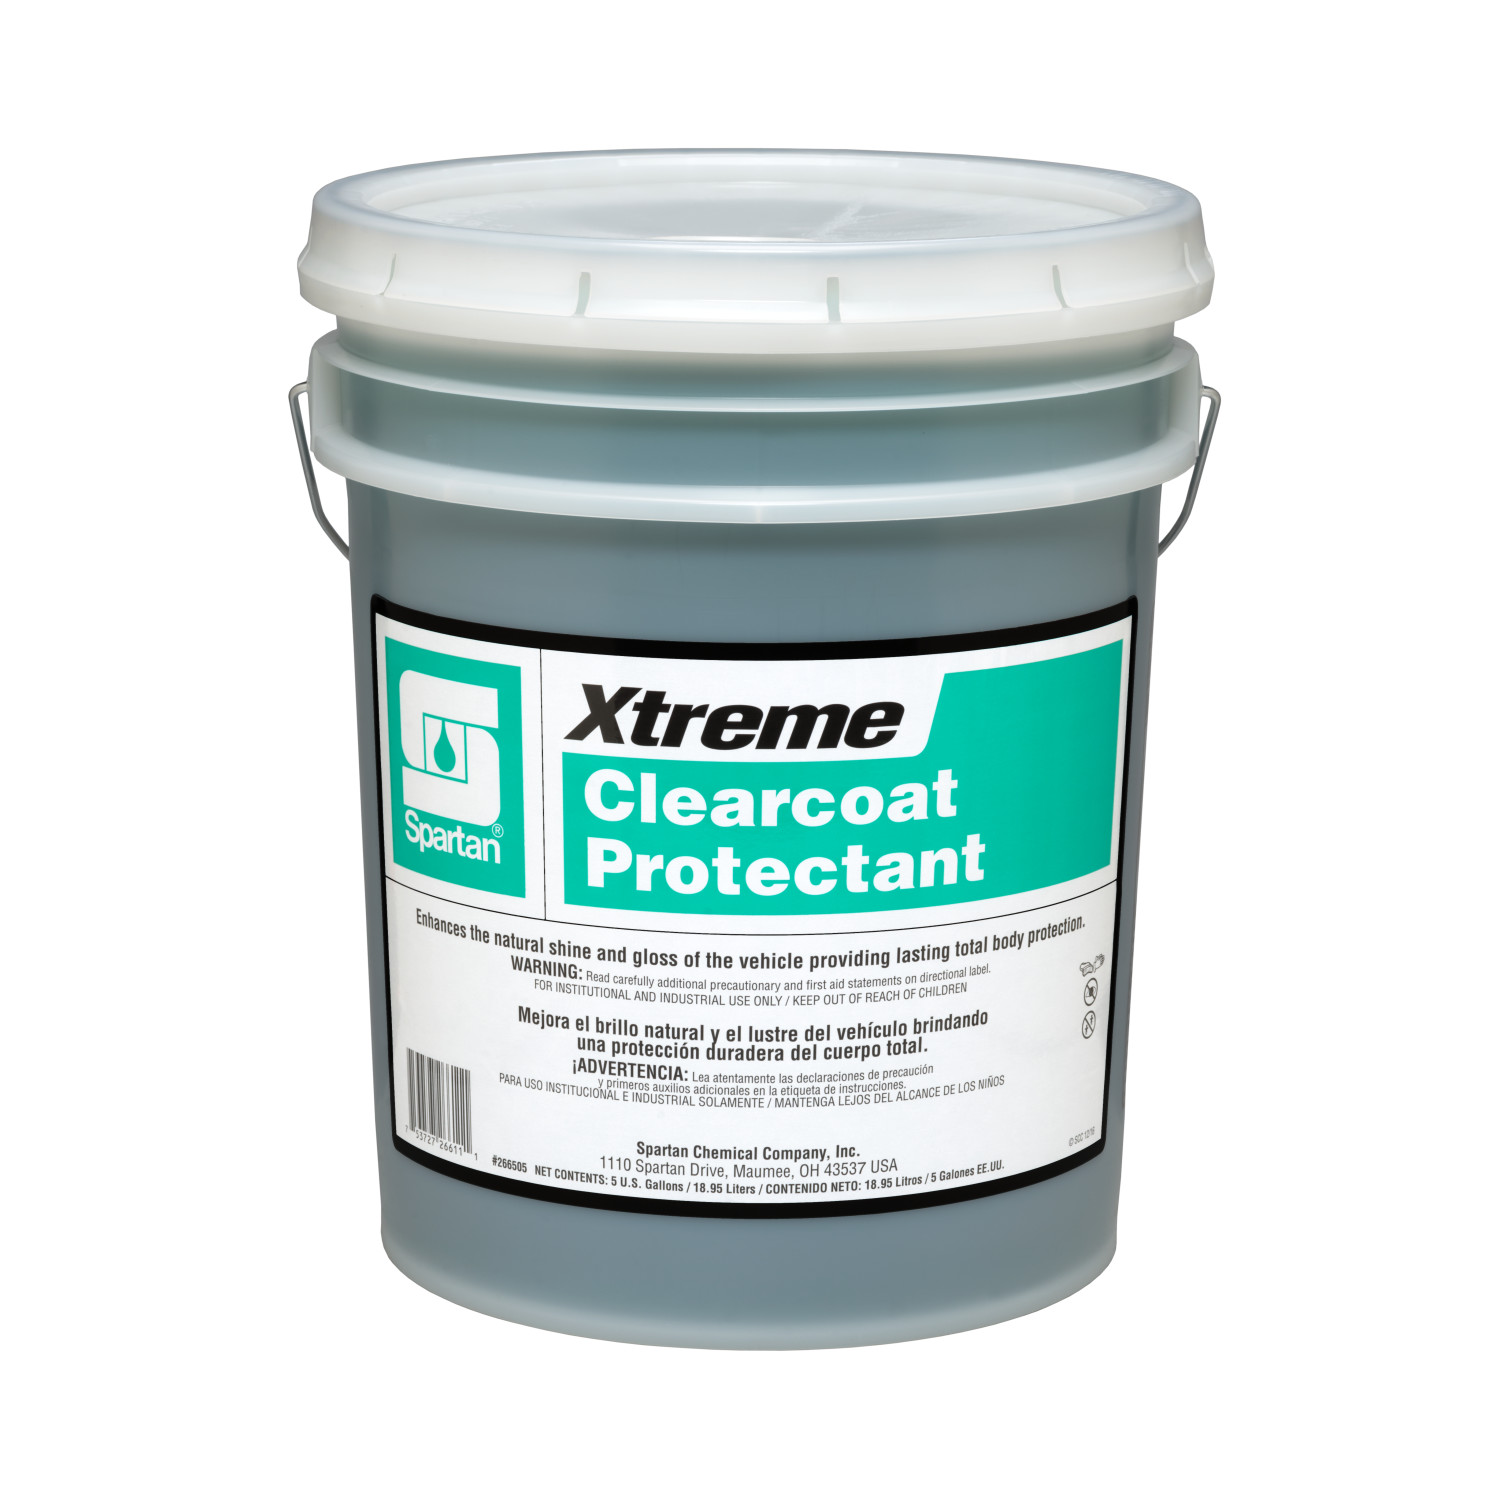 Xtreme® Clearcoat Protectant 5 gallon pail